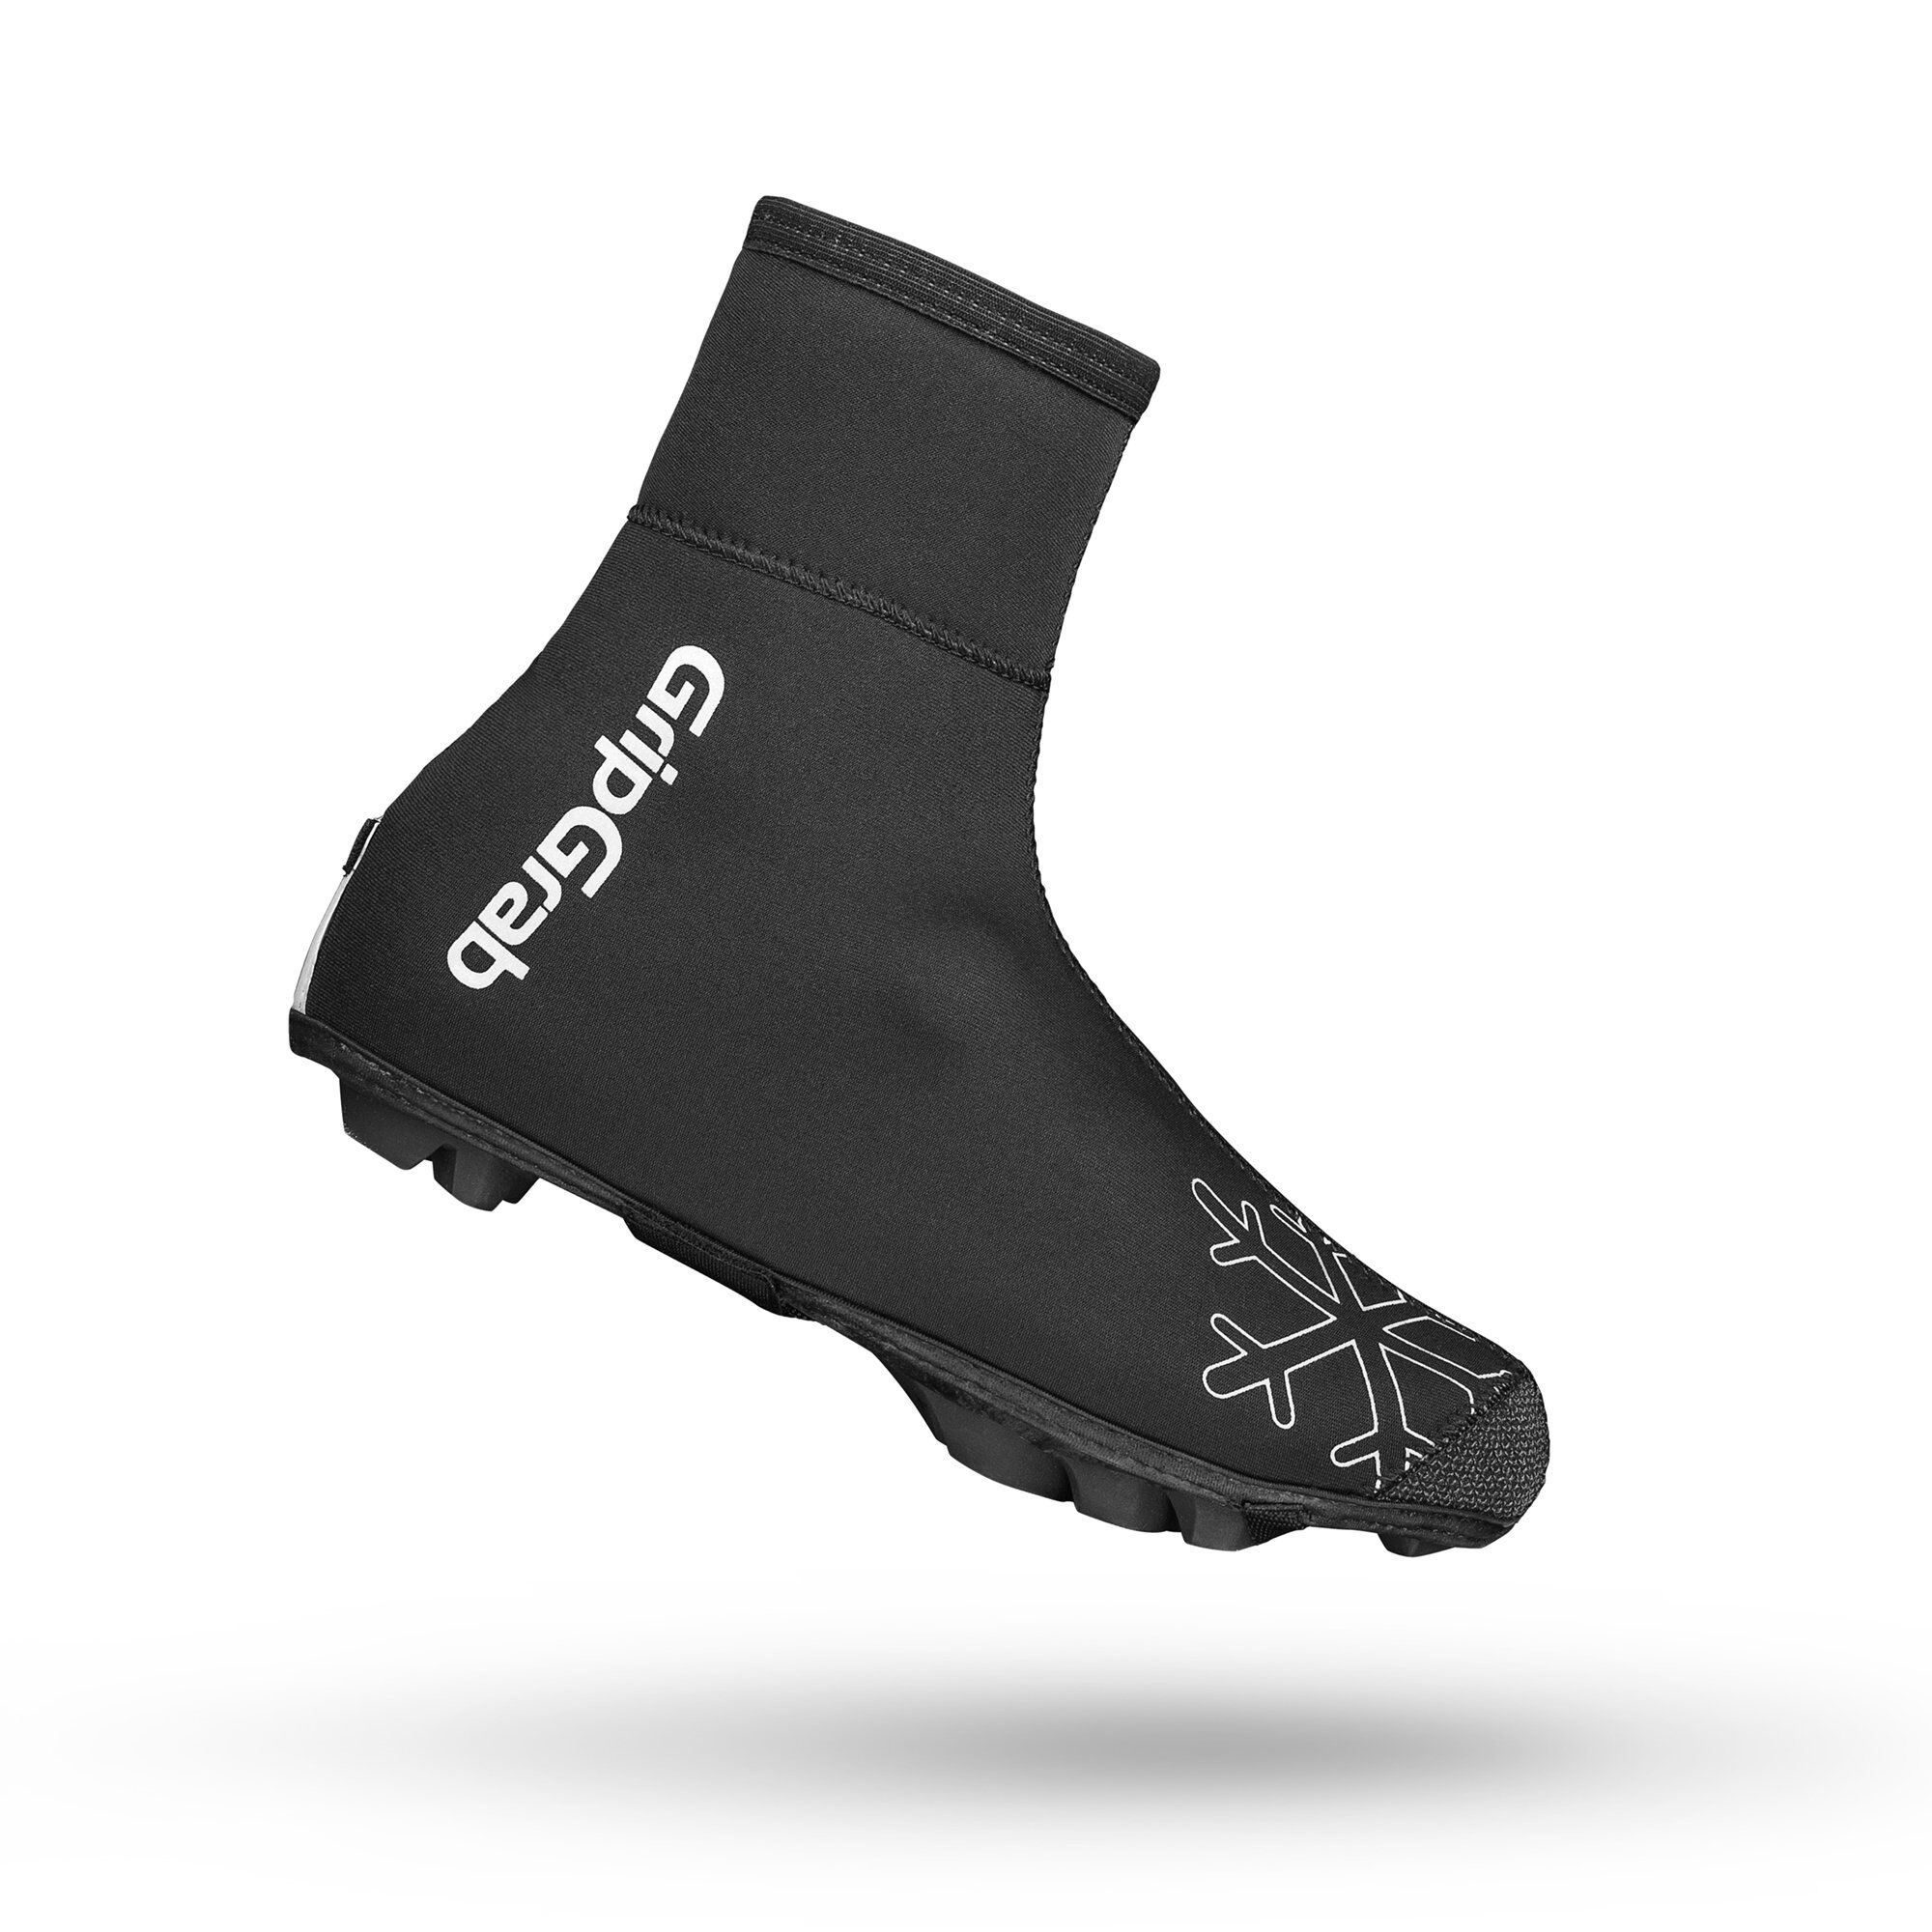 Grip Grab Arctic X Waterproof Deep Winter MTB/CX Shoe Cover - Oversko